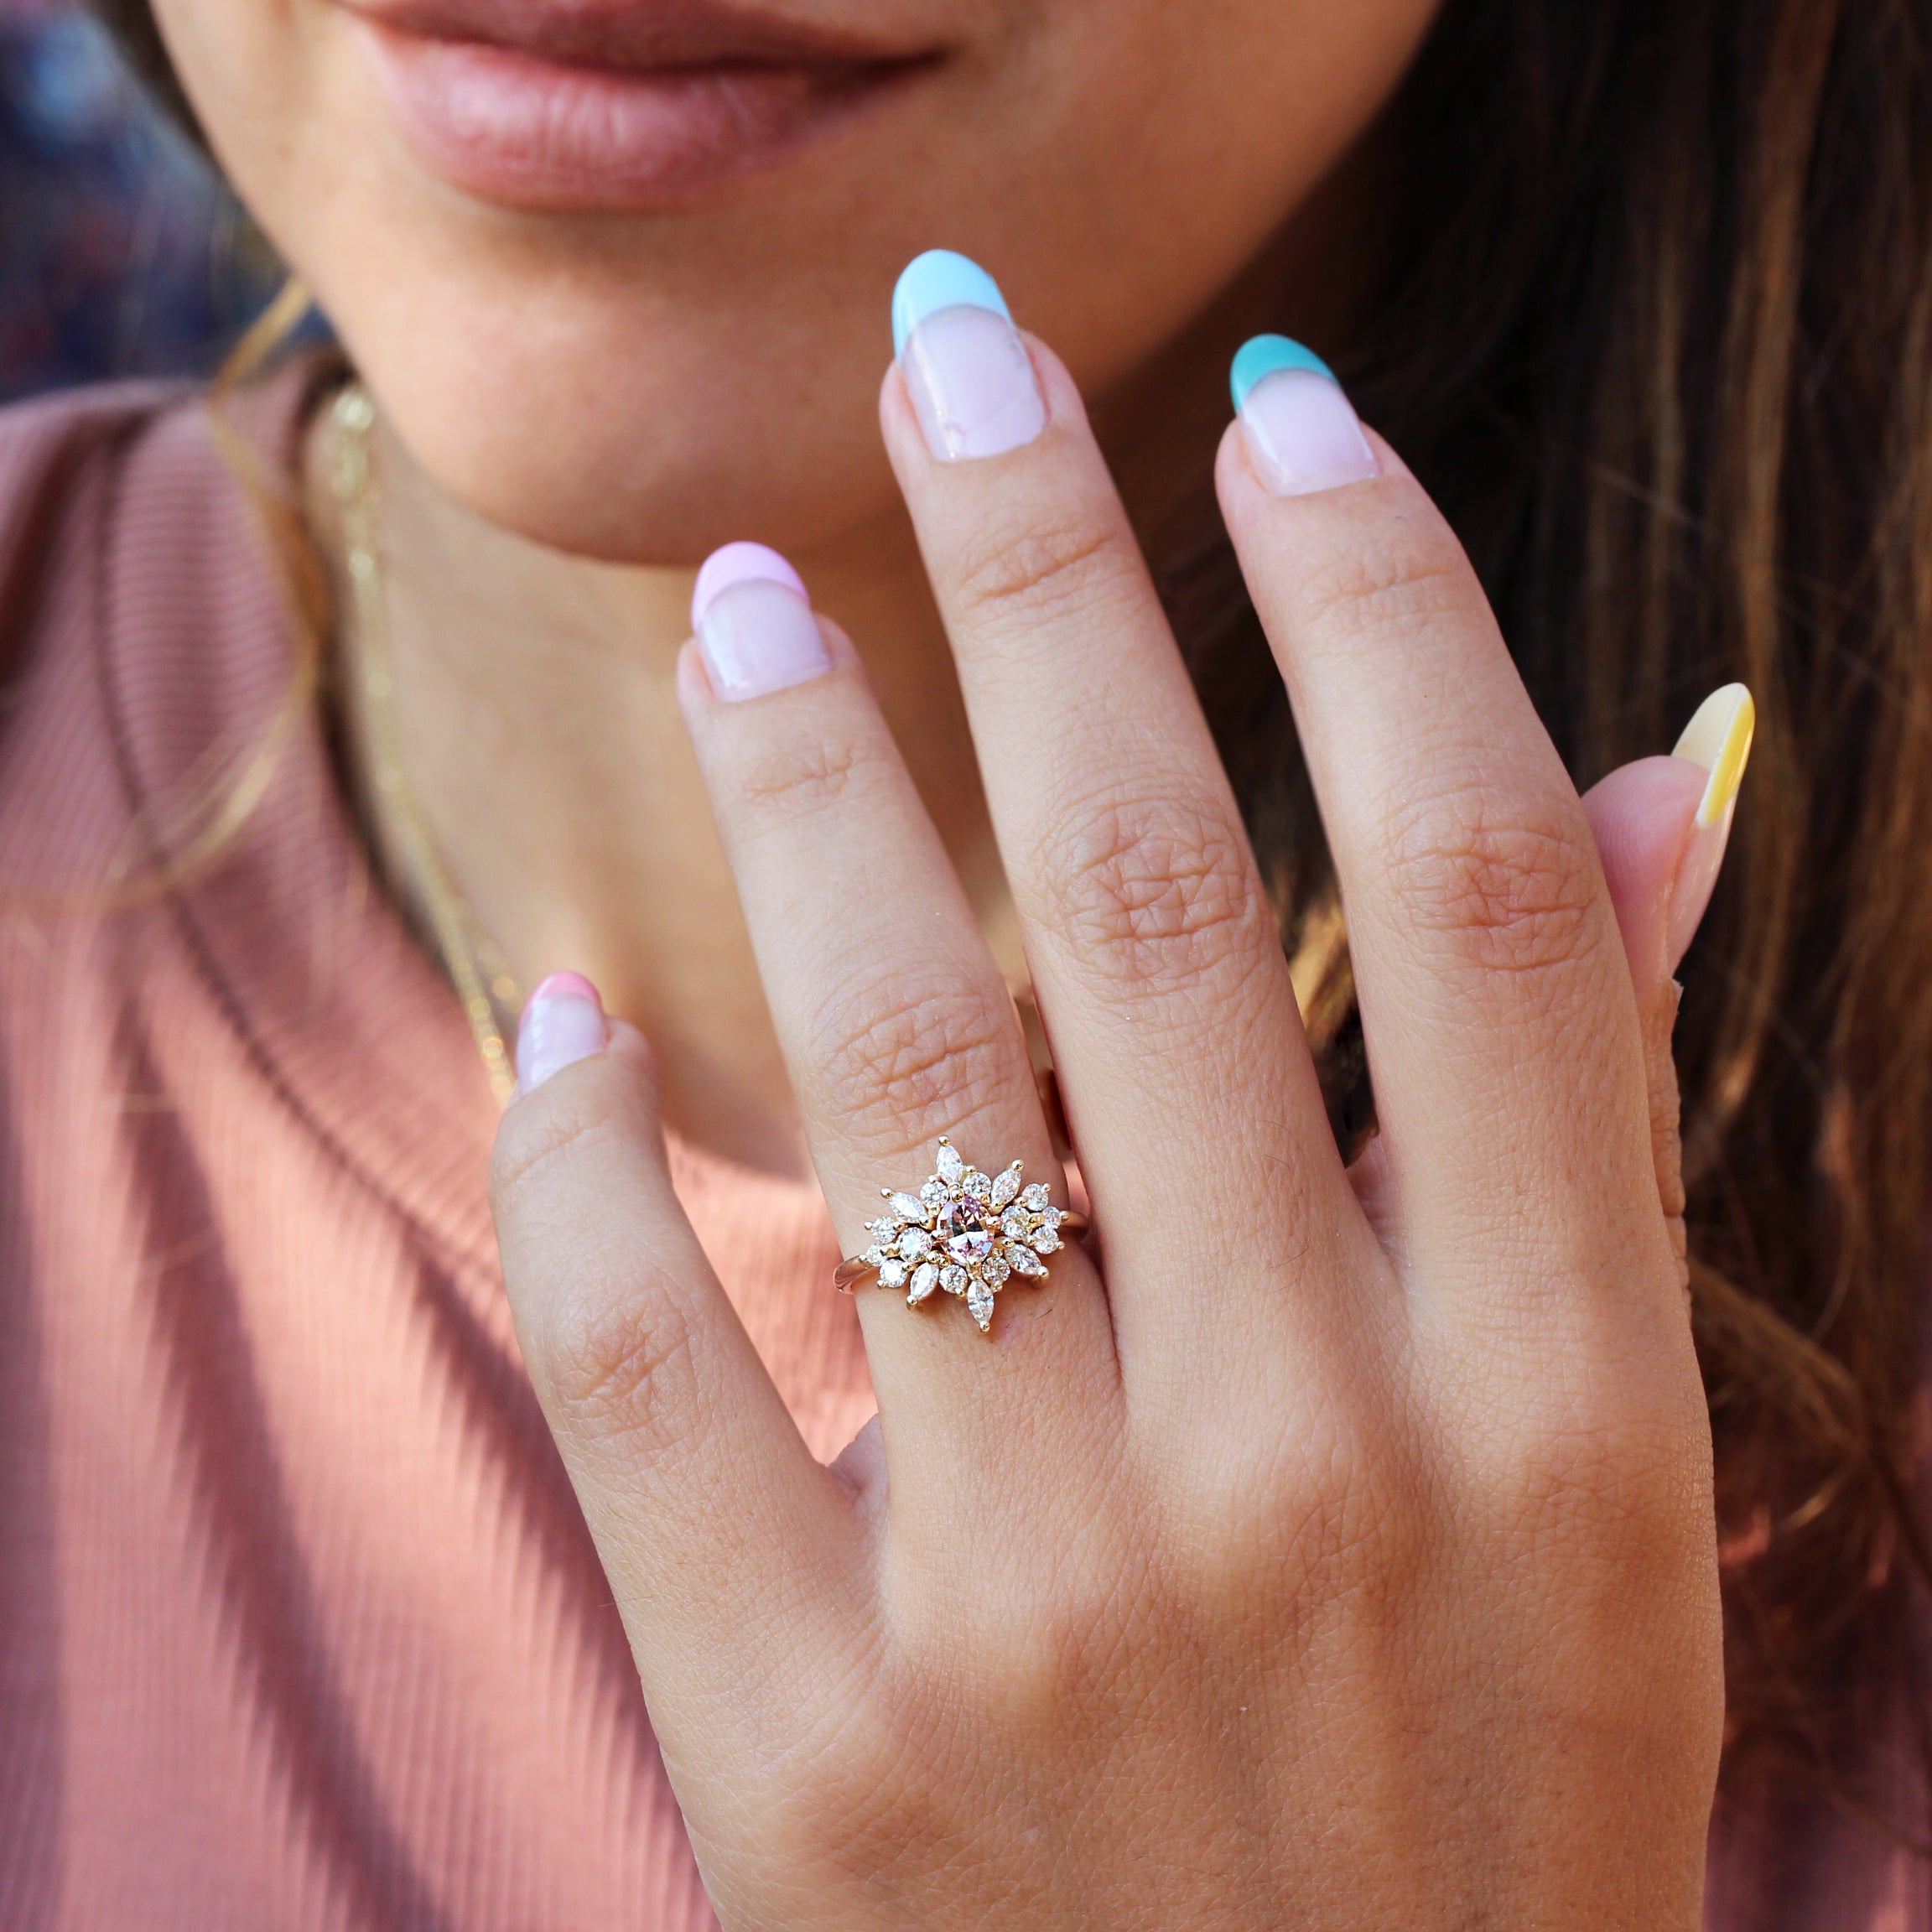 Oval pink sapphire & diamonds engagement ring, Phoenix ♥